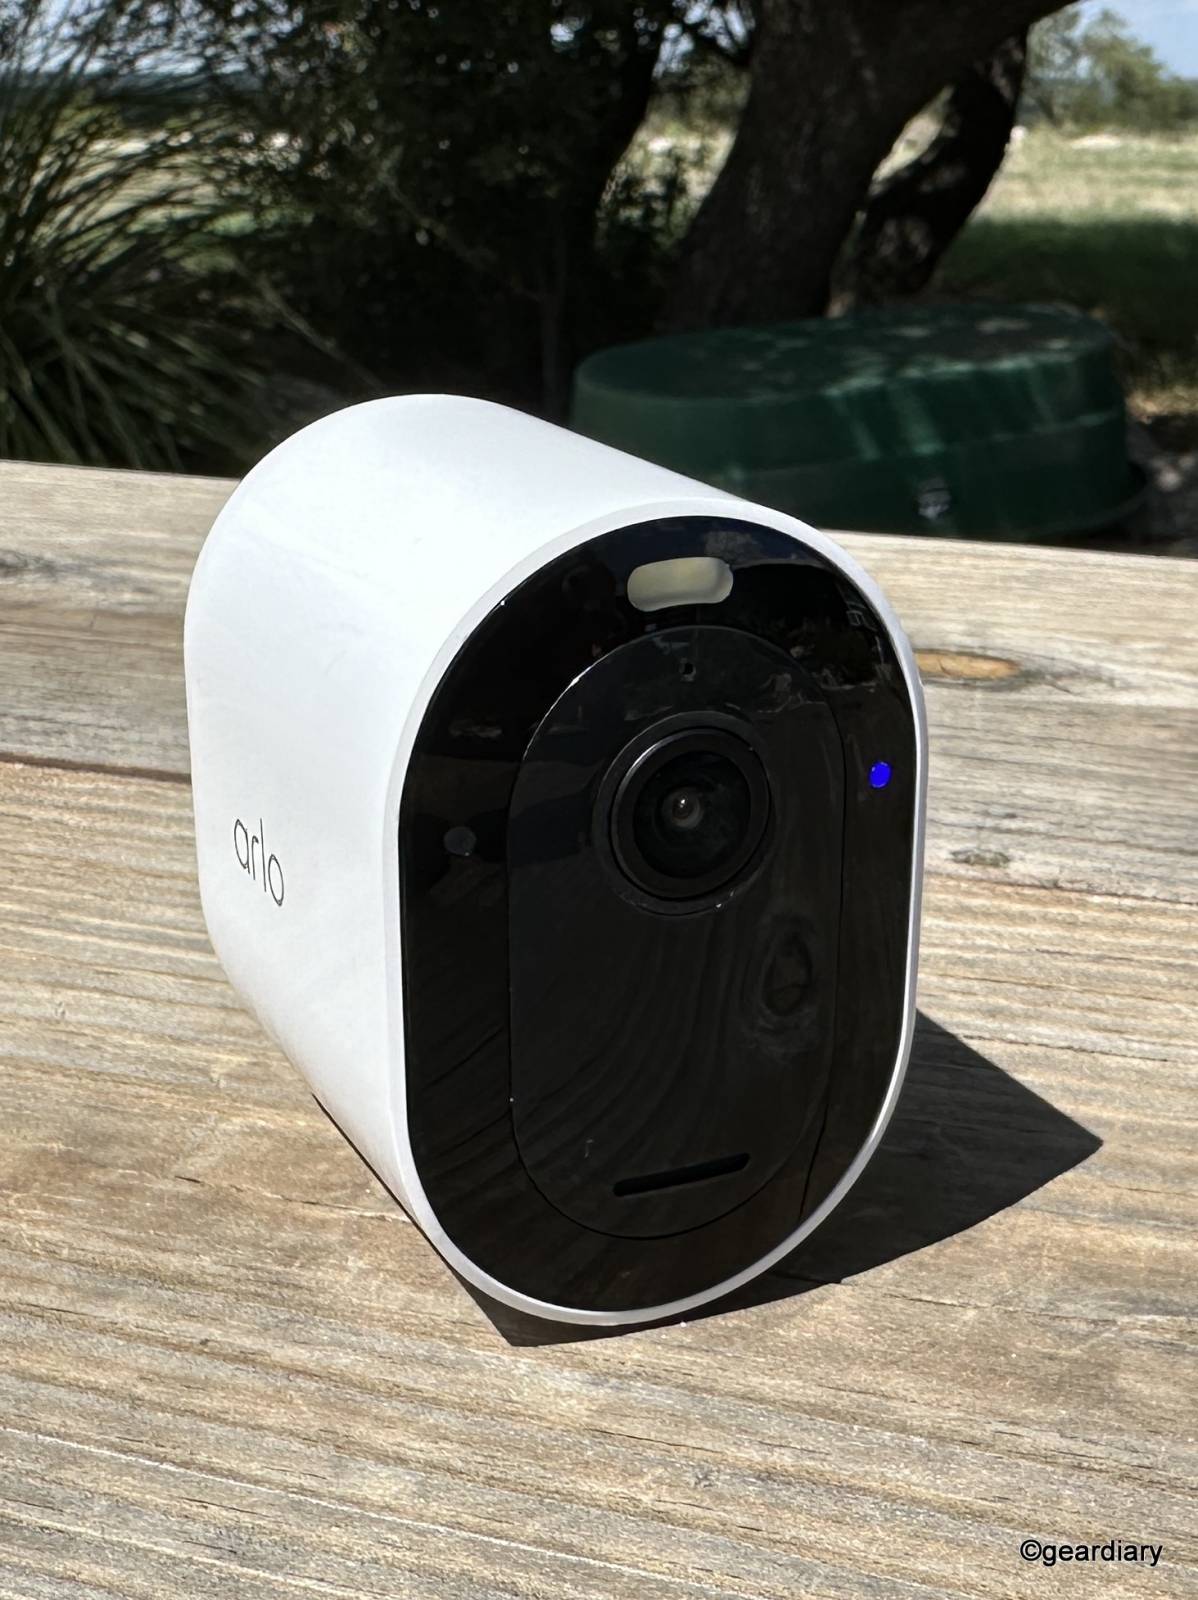 Arlo Pro 5S 2K Wireless Security Camera